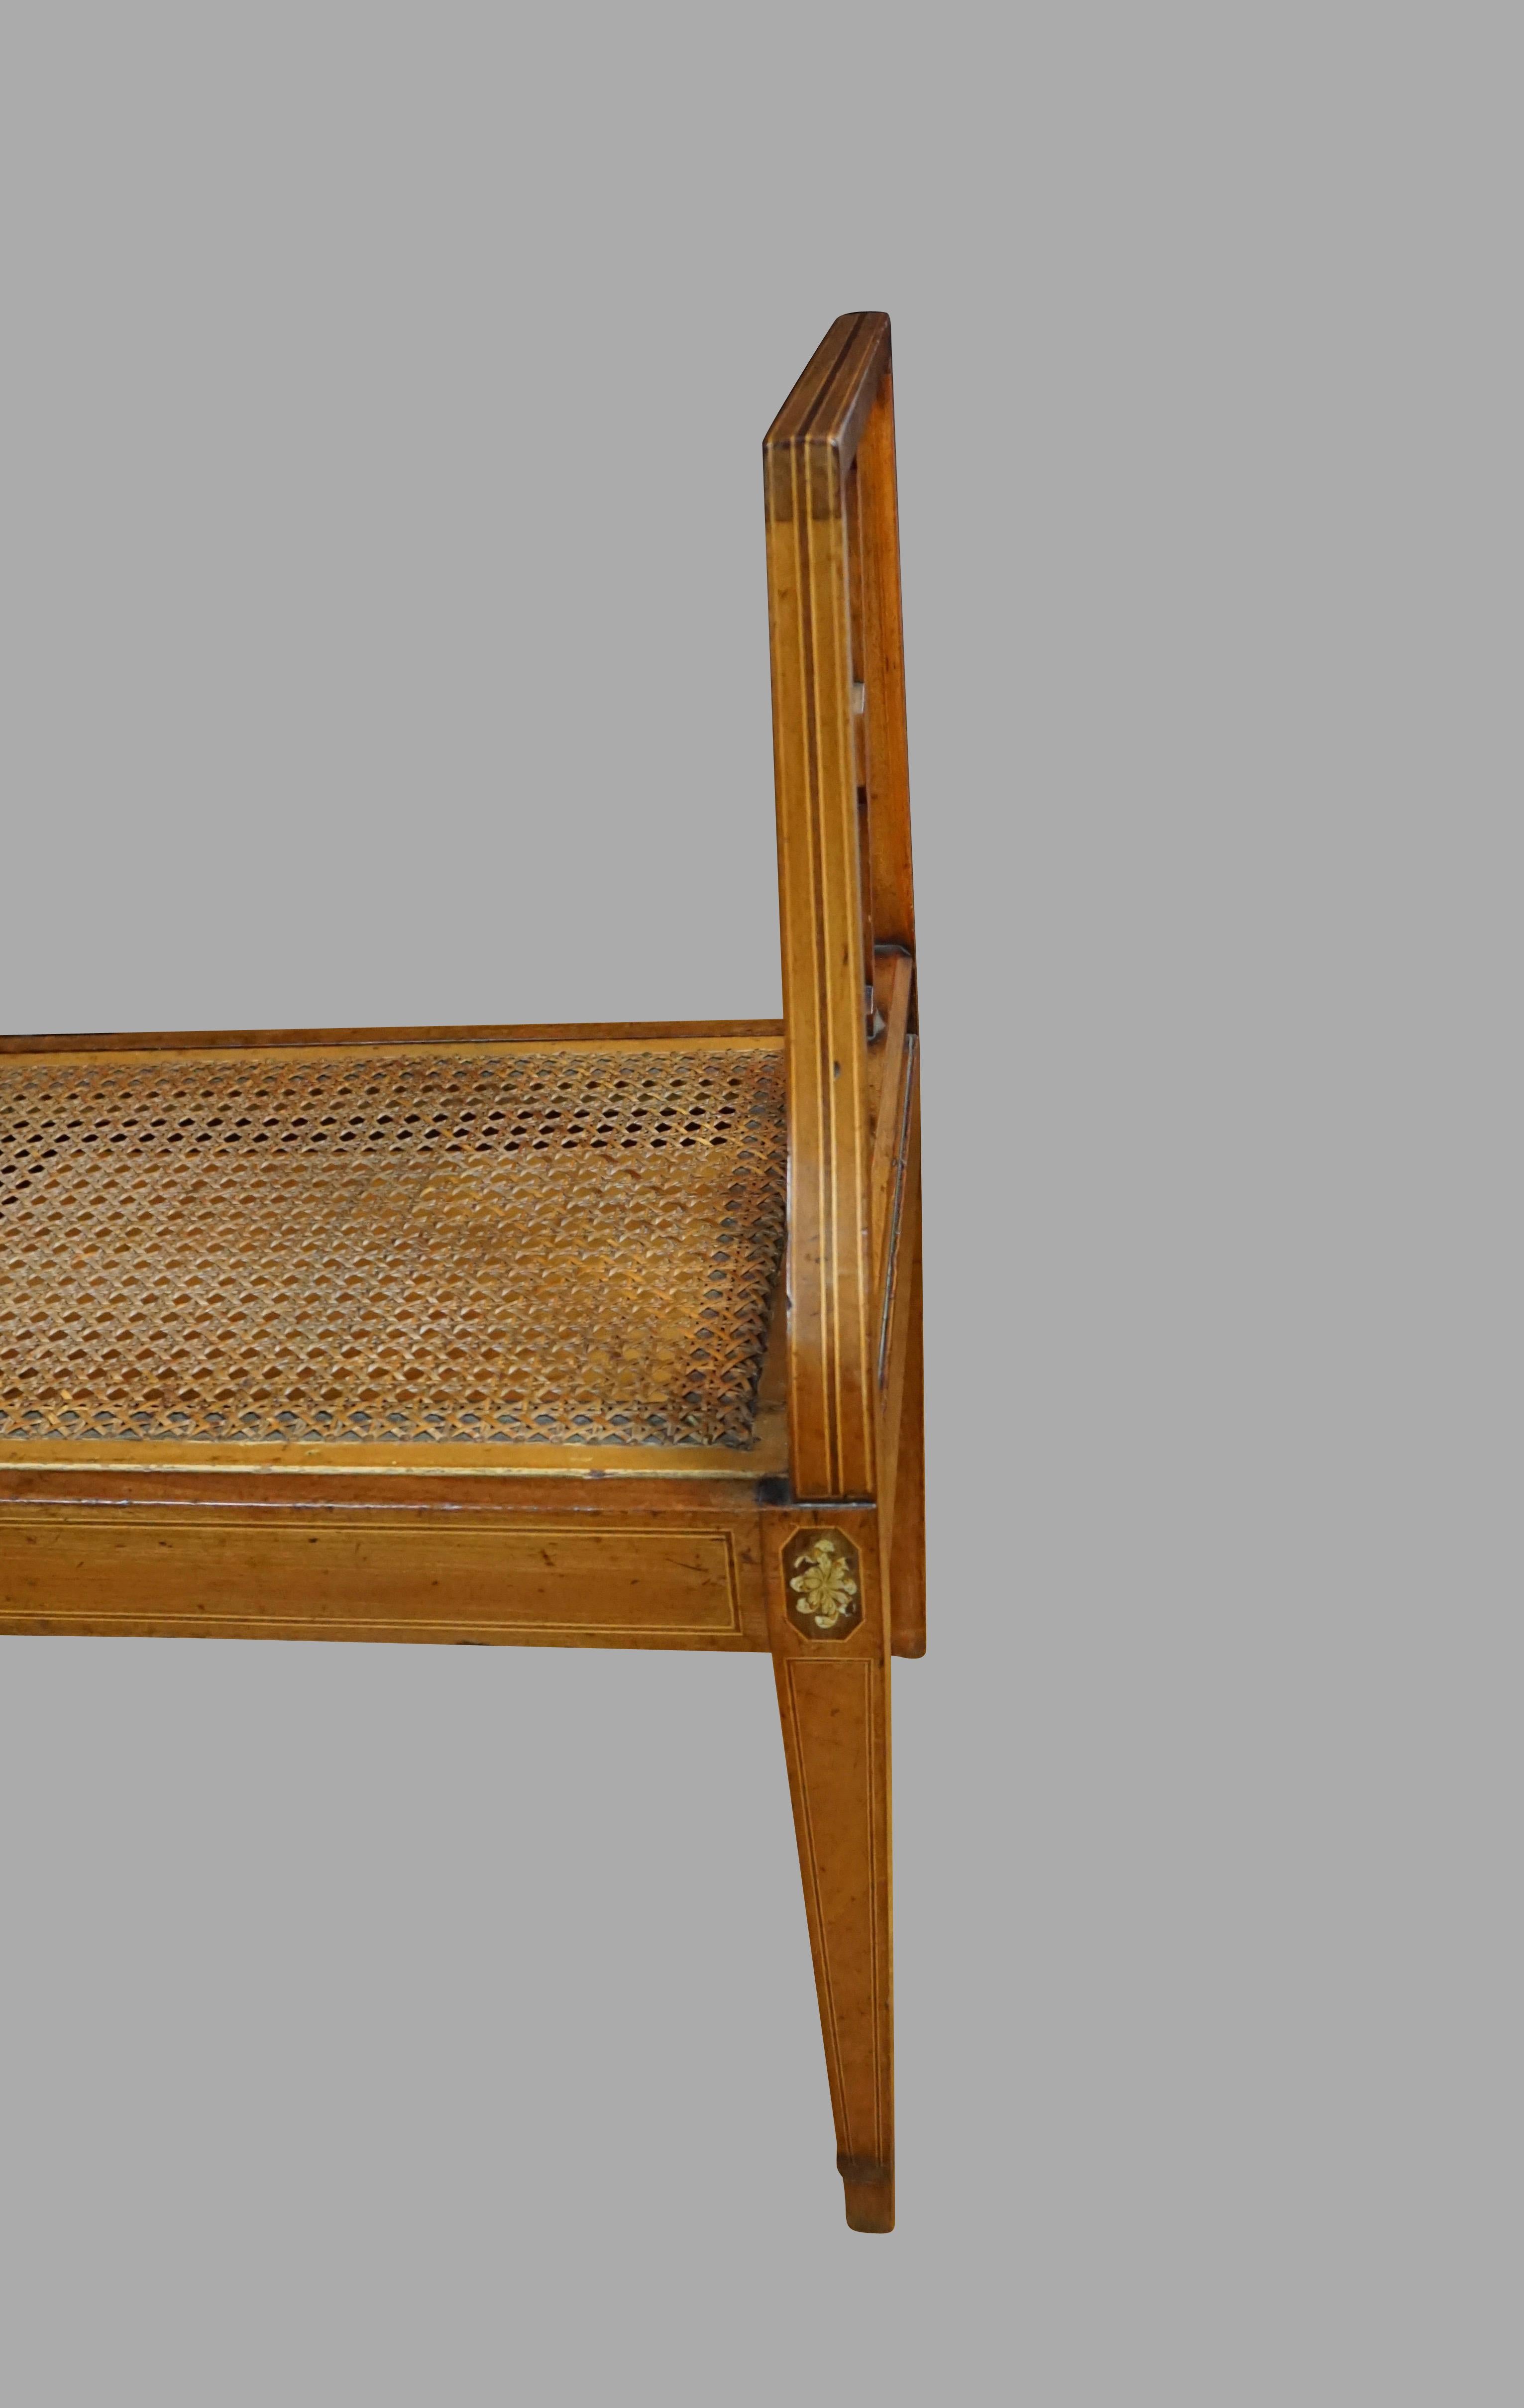 English Hepplewhite Inlaid Mahogany Window Seat with Caned Seat 1